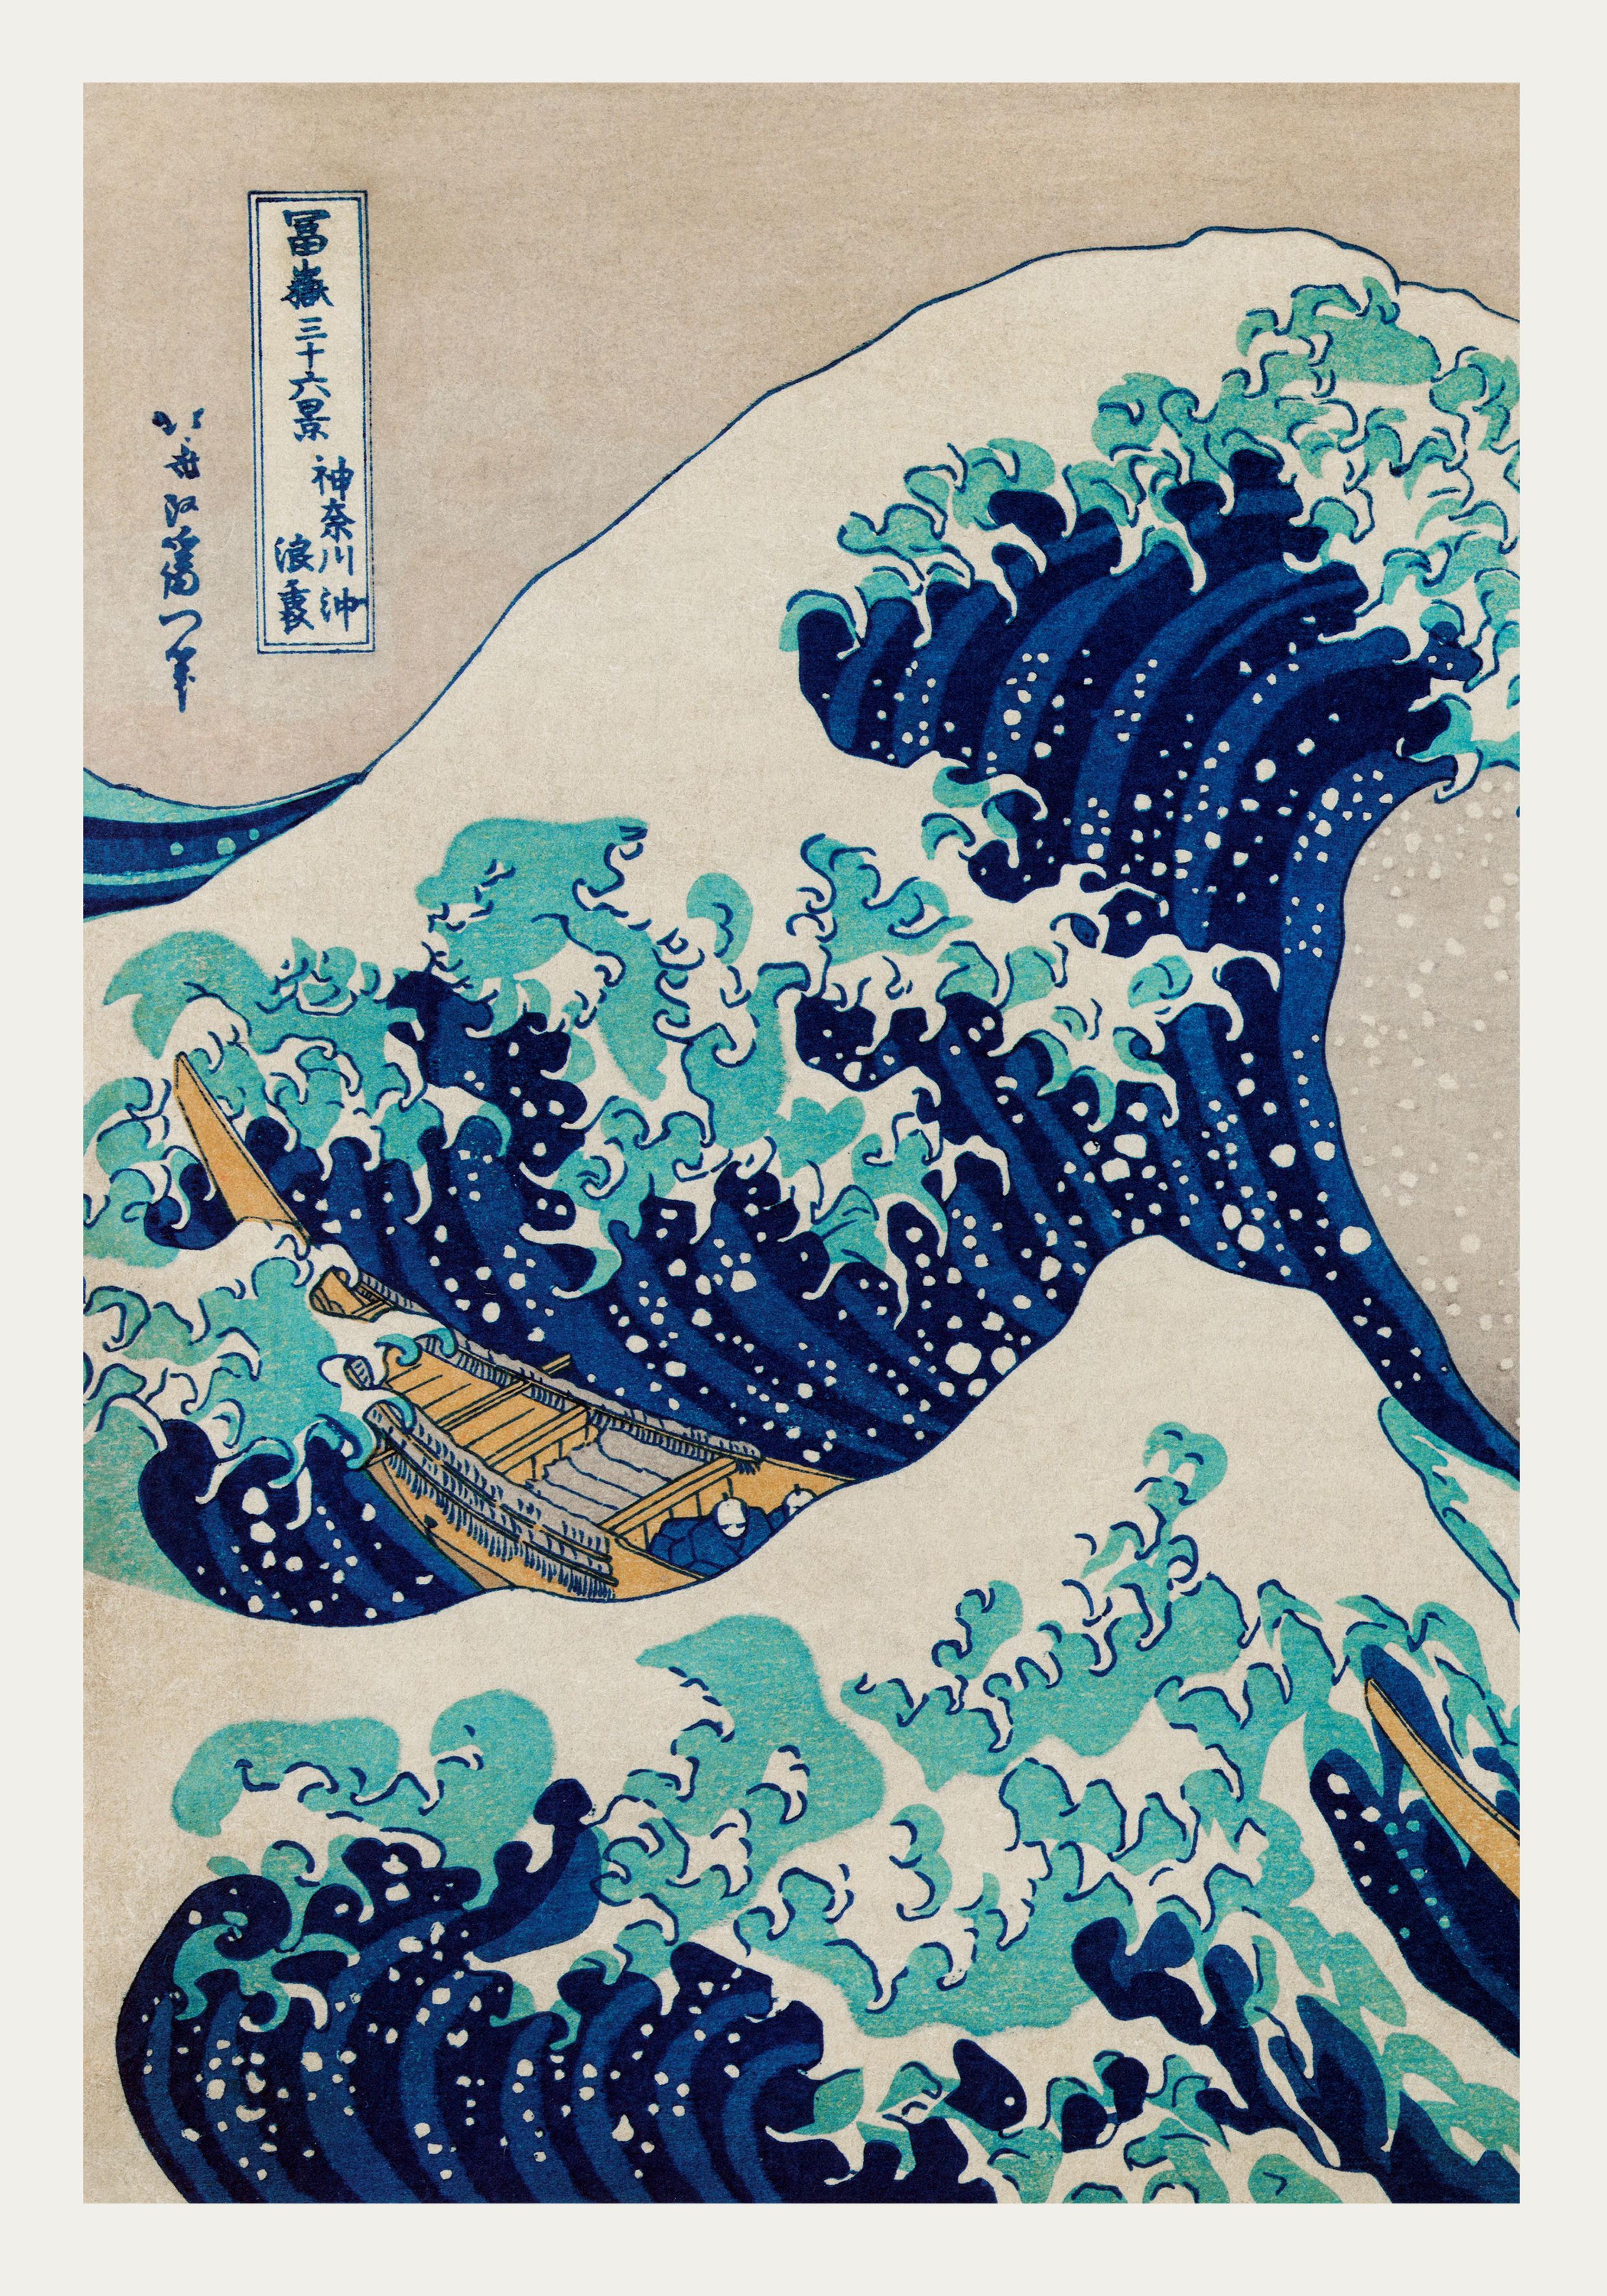 Plakat Katsushika Hokusai's The Great Wave off Kanagawa